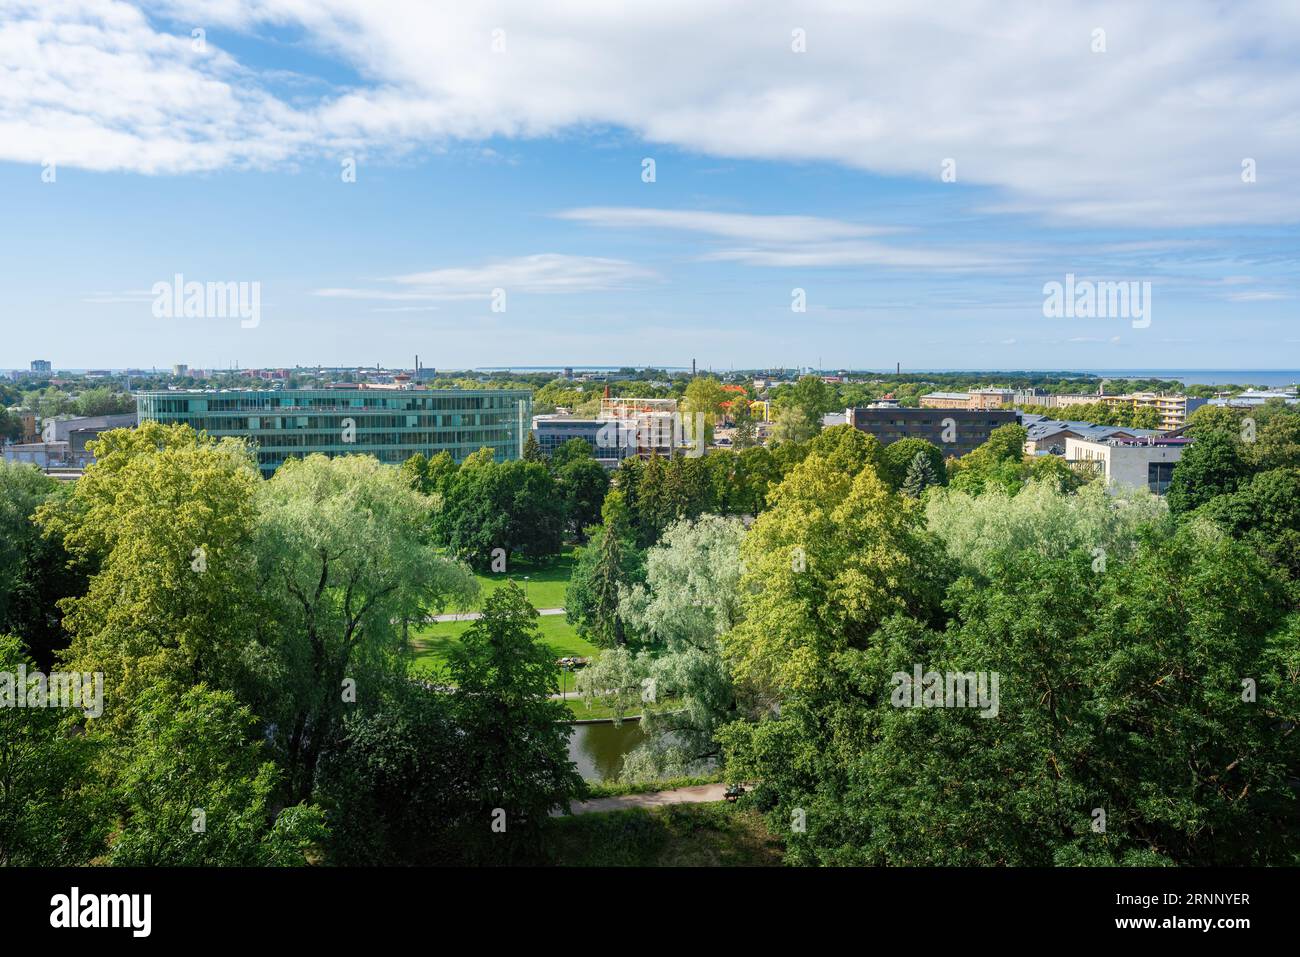 View from Piiskopi observation platform with Snelli park - Tallinn, Estonia Stock Photo